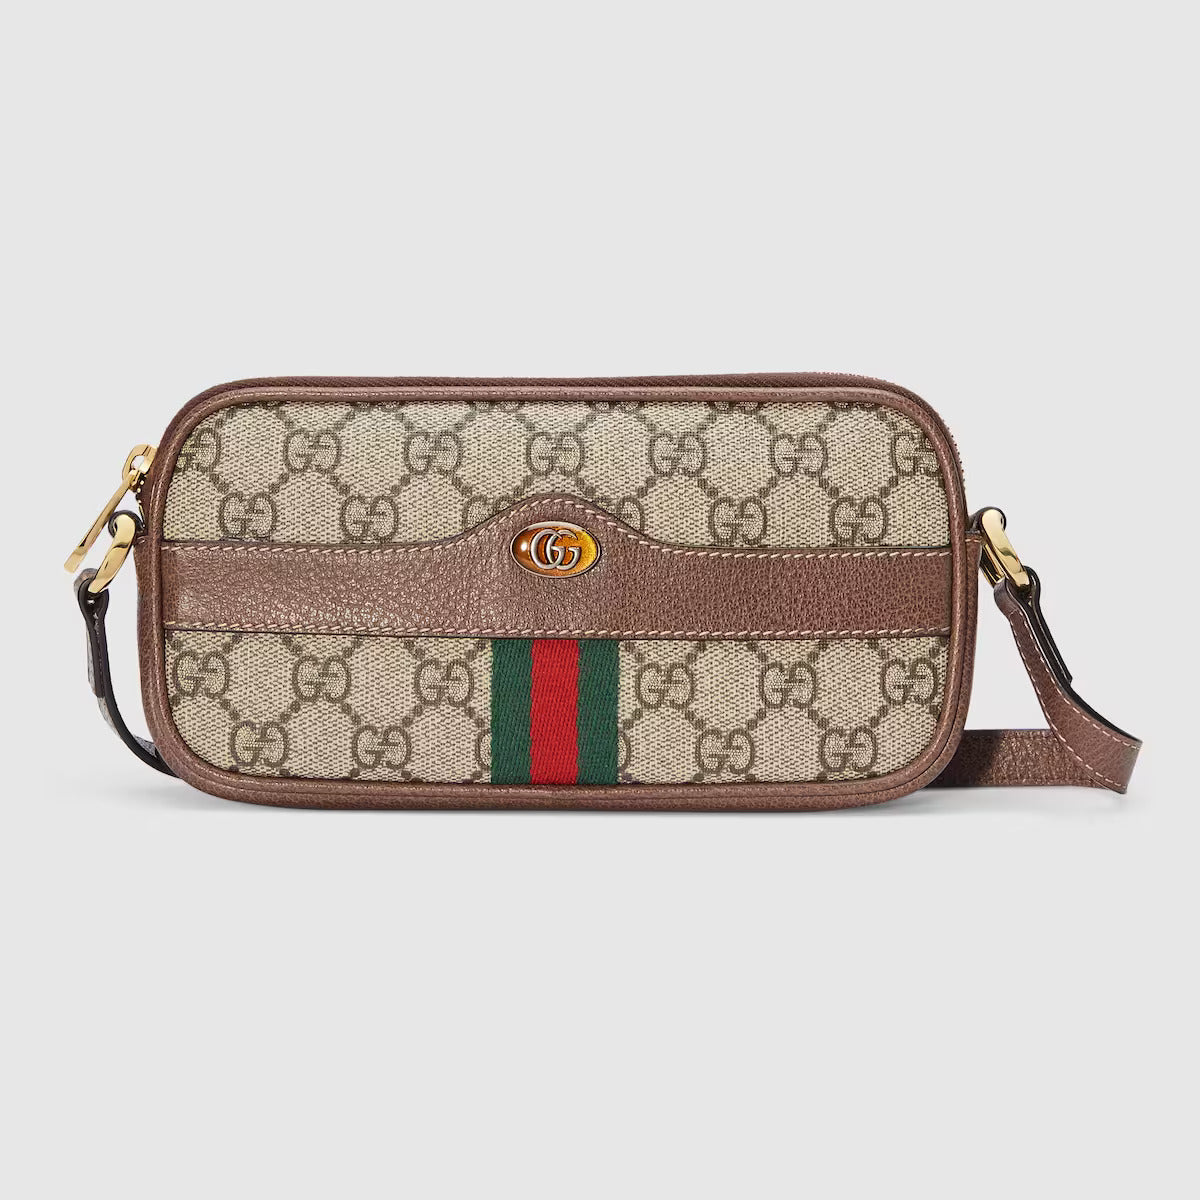 Gucci Ophidia GG Mini Bag (Beige/ebony)